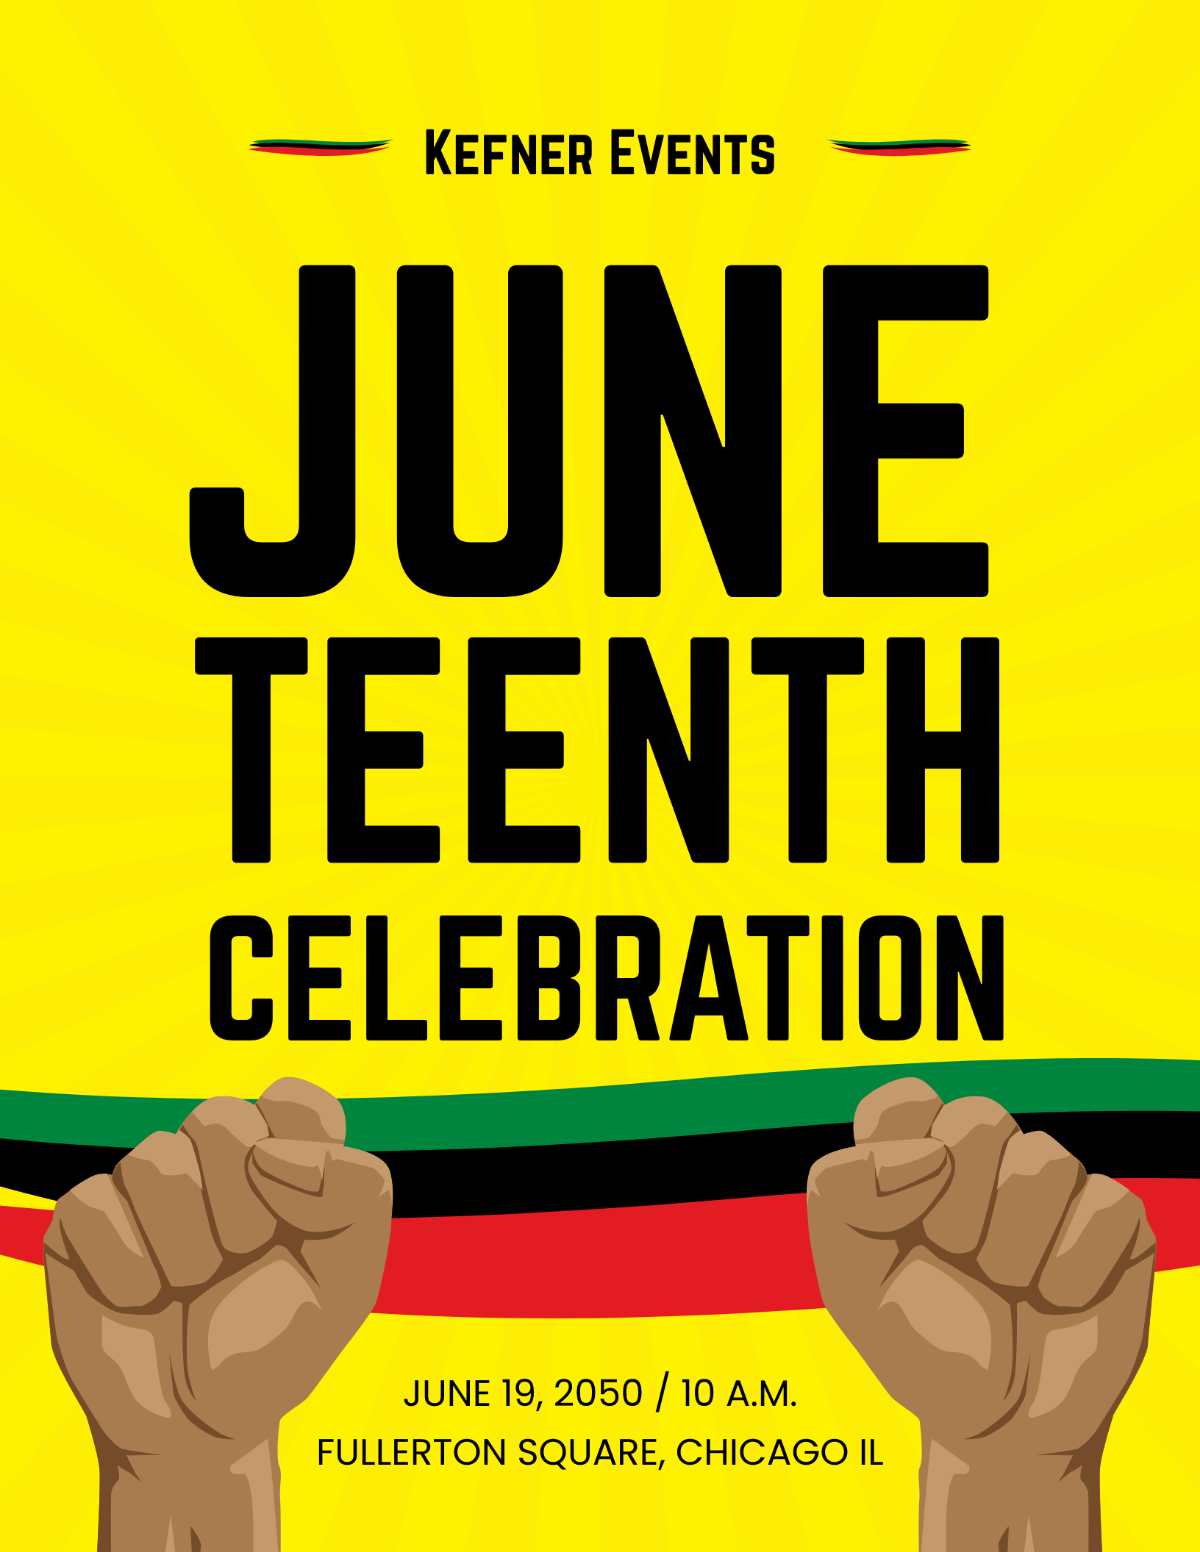 Free Juneteenth Celebration Flyer Template